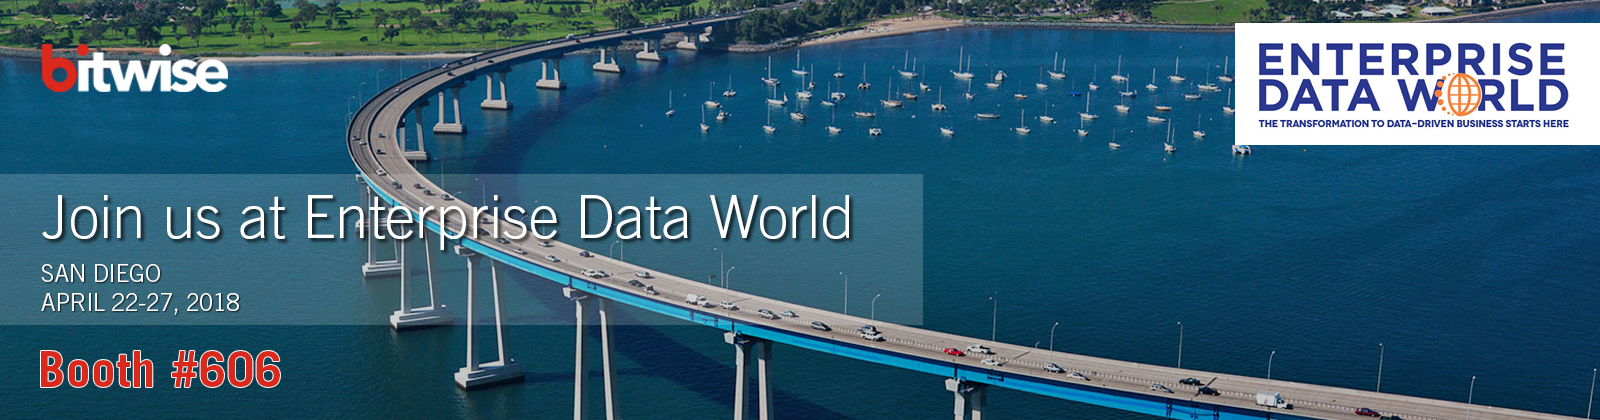 Join us at Enterprise Data World